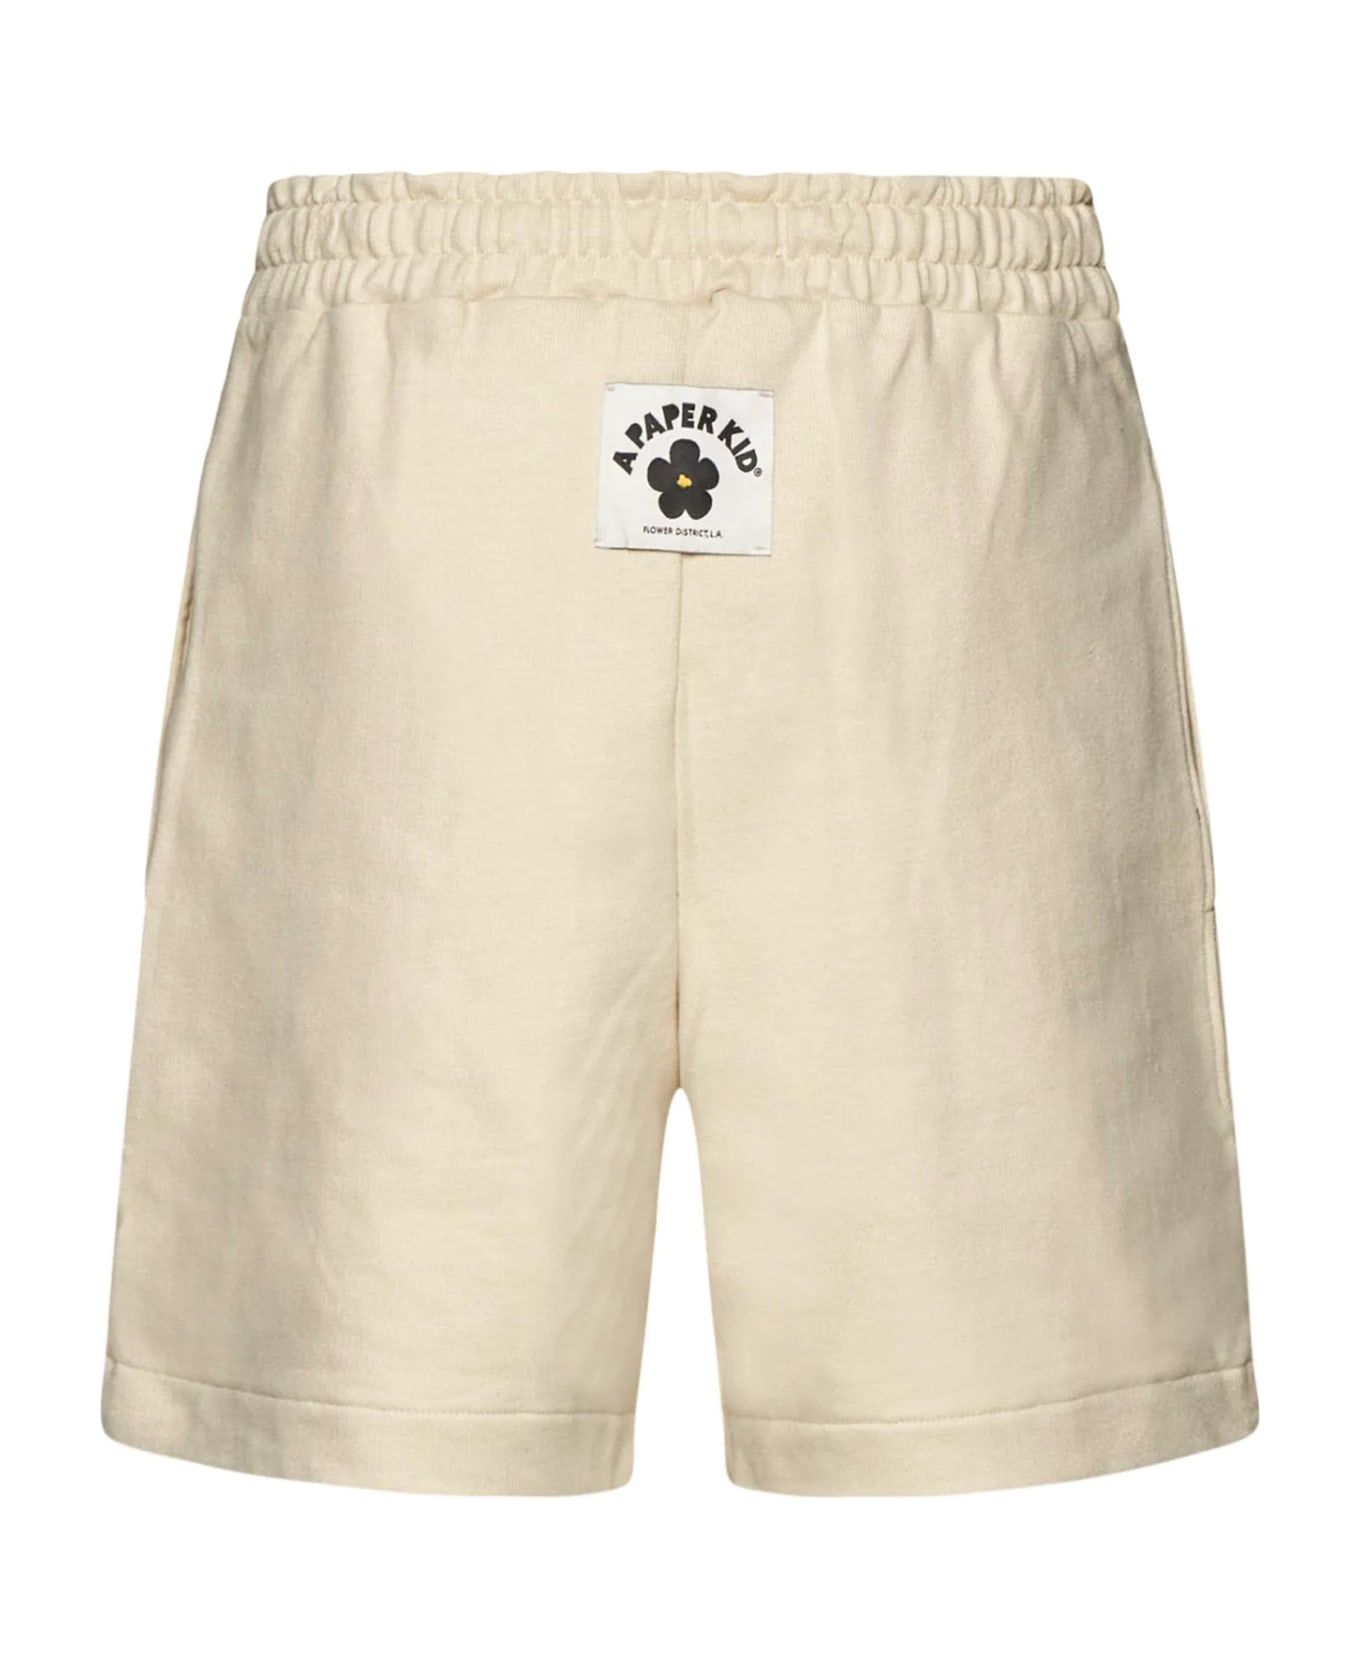 A Paper Kid Cream White Cotton Track Shorts - NEUTRALS